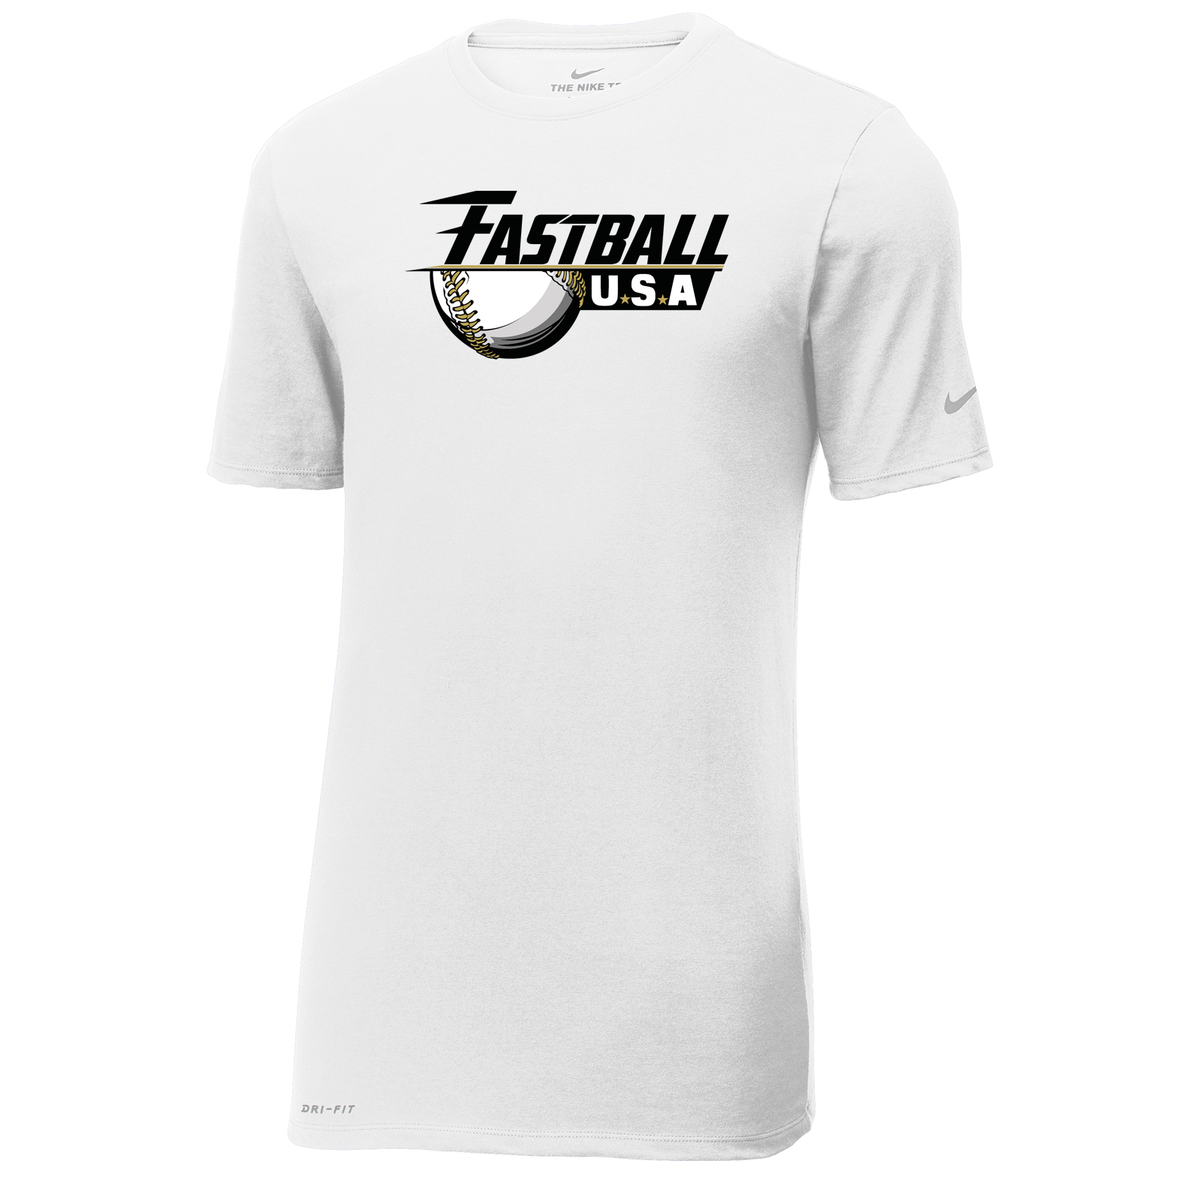 Fastball USA Baseball  Nike Dri-FIT Tee